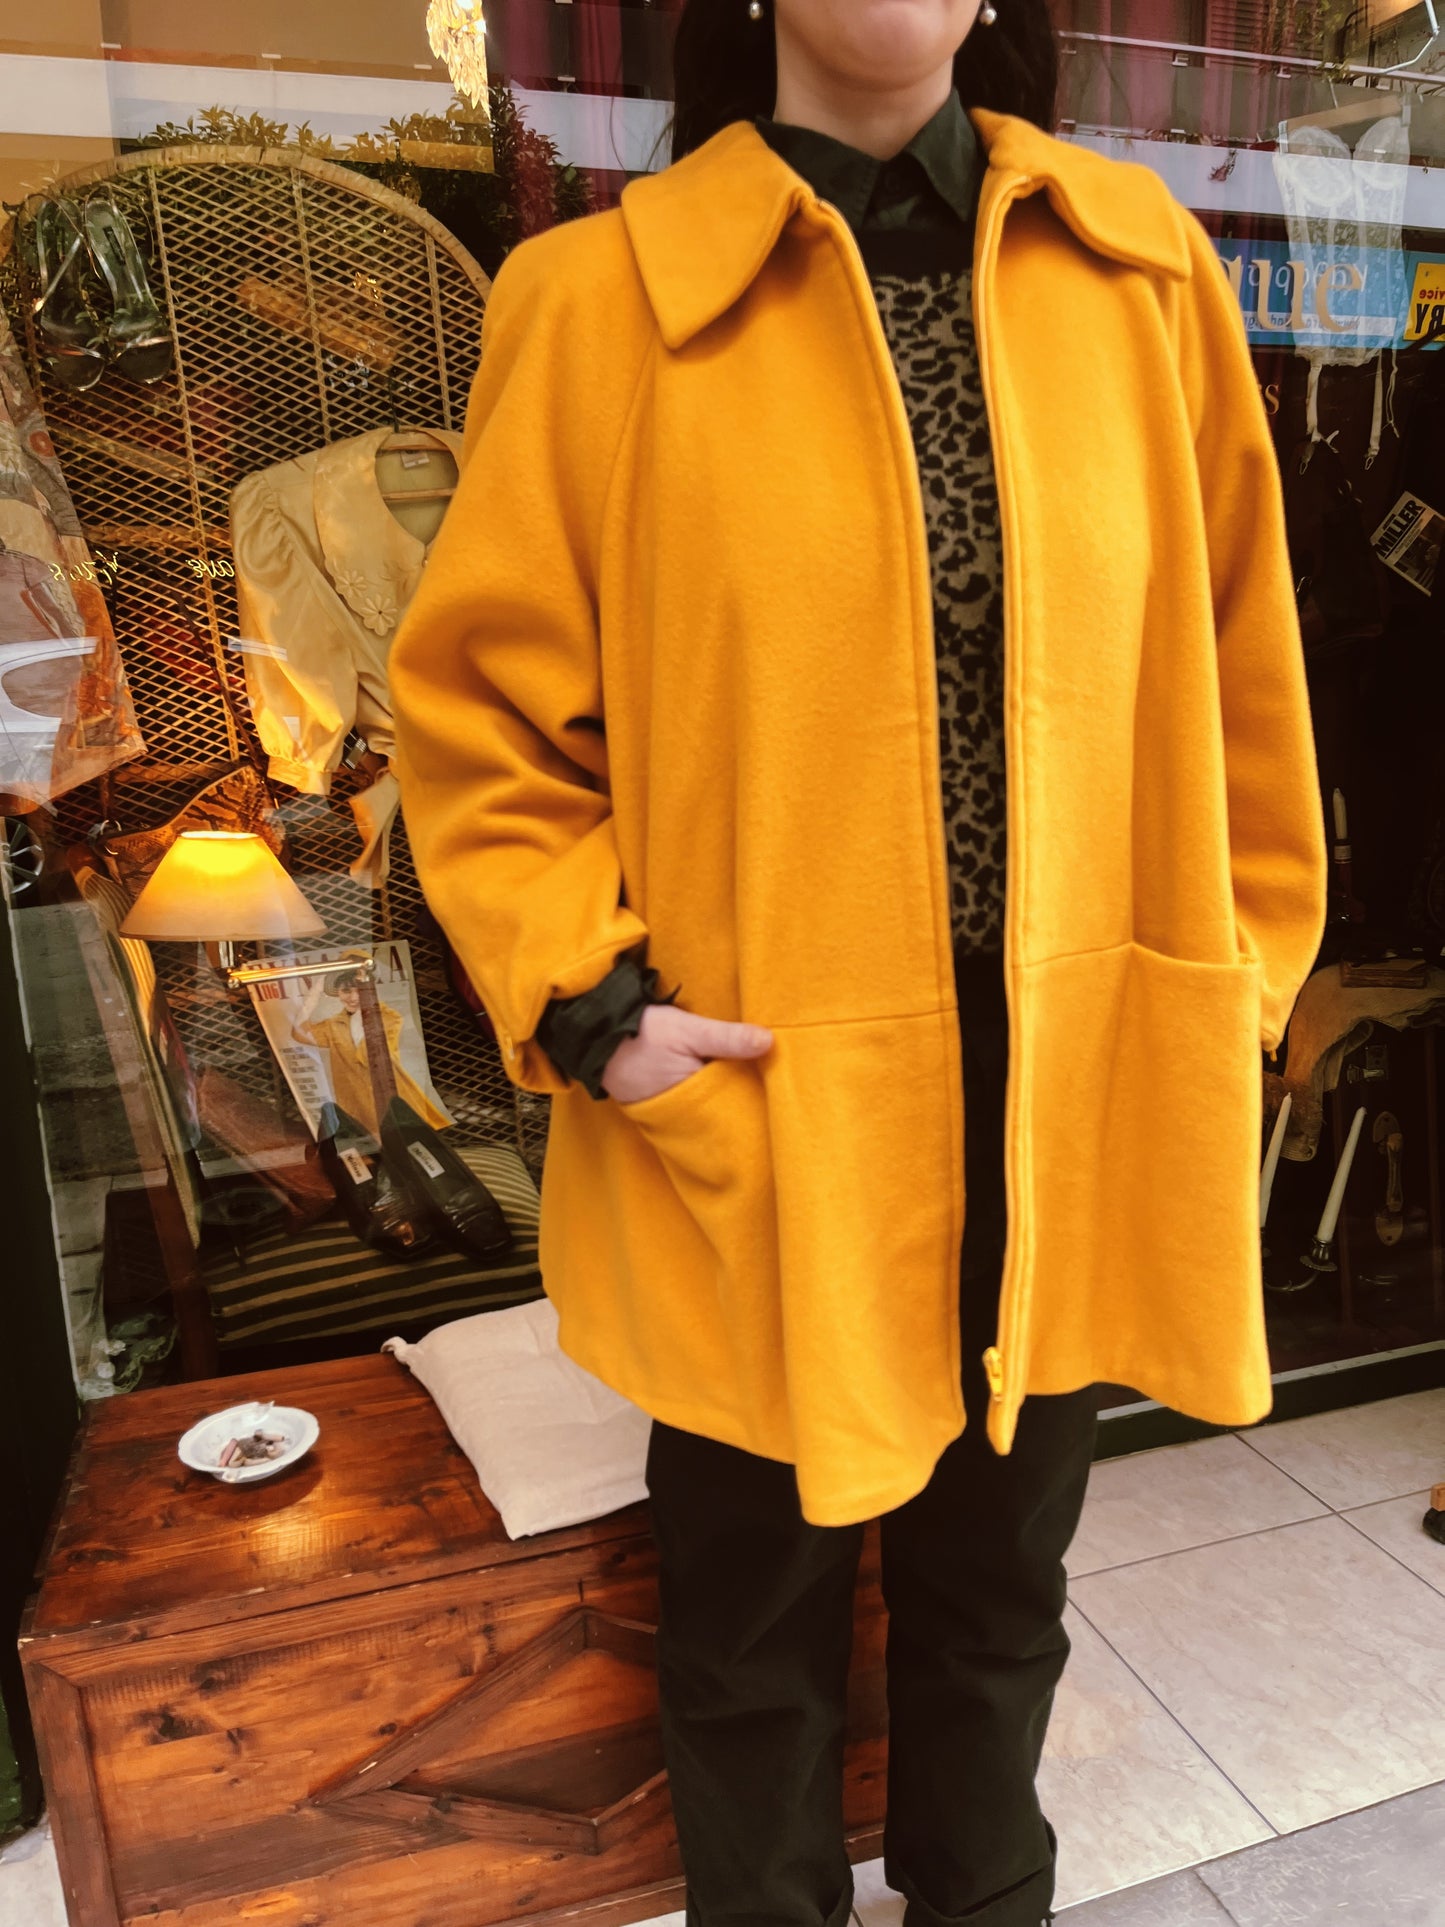 Vintage yellow zip up coat .Fits best L/XL